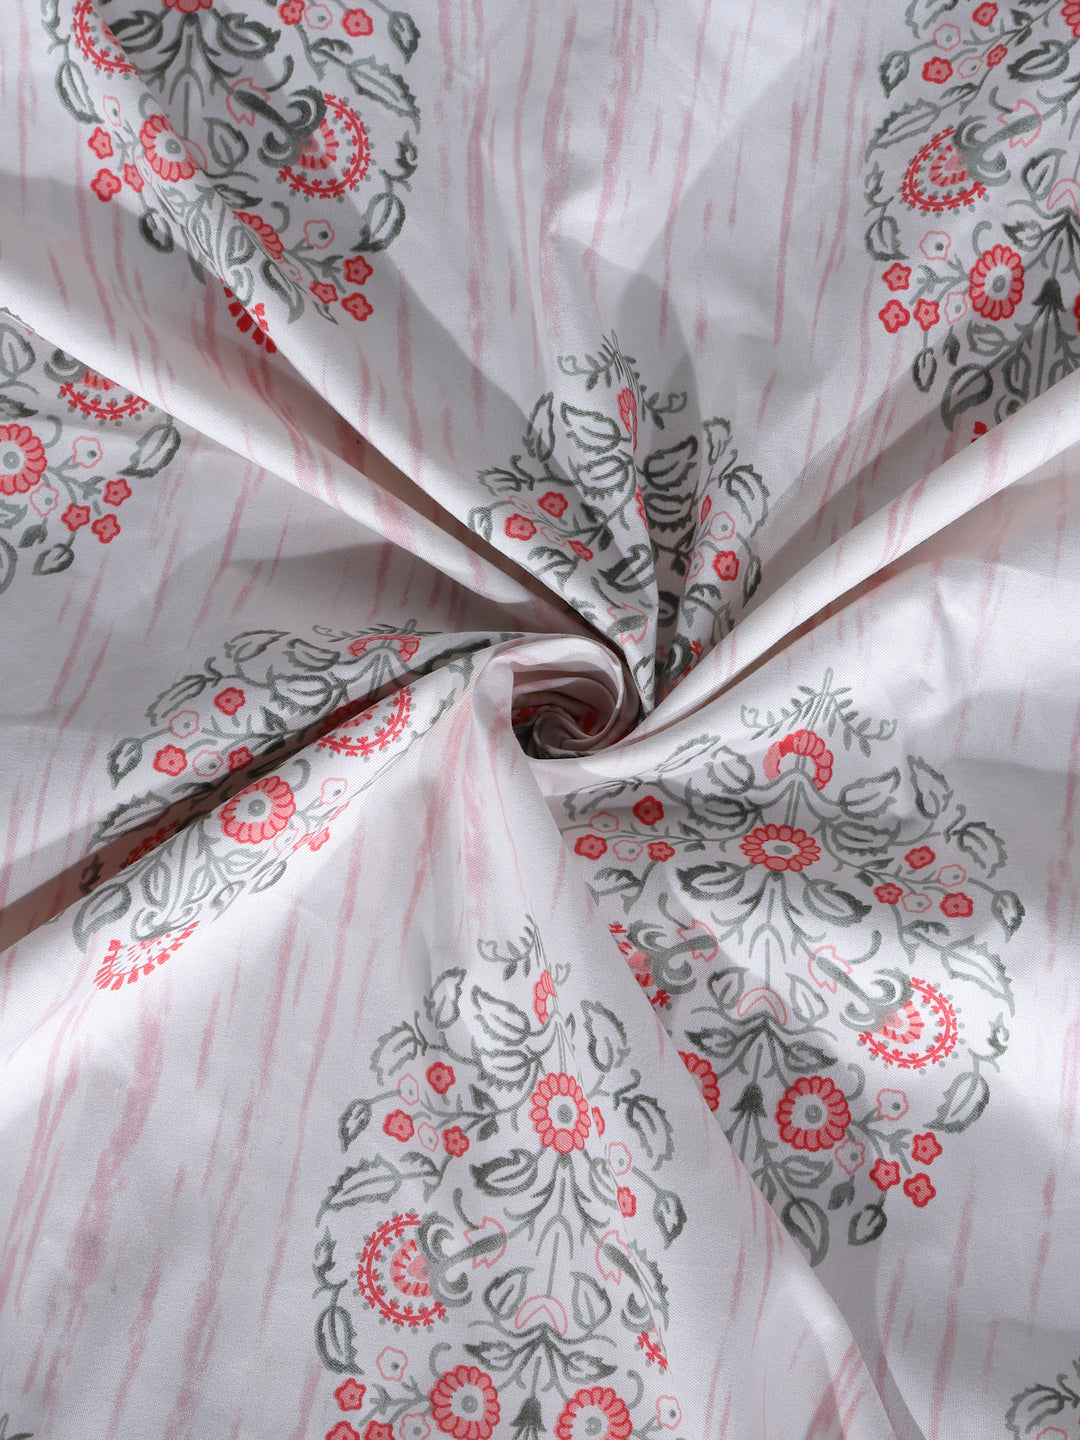 Klotthe Multi Floral 300 TC Cotton Blend Super King Double Bedsheet with 2 Pillow covers (270X270 cm)